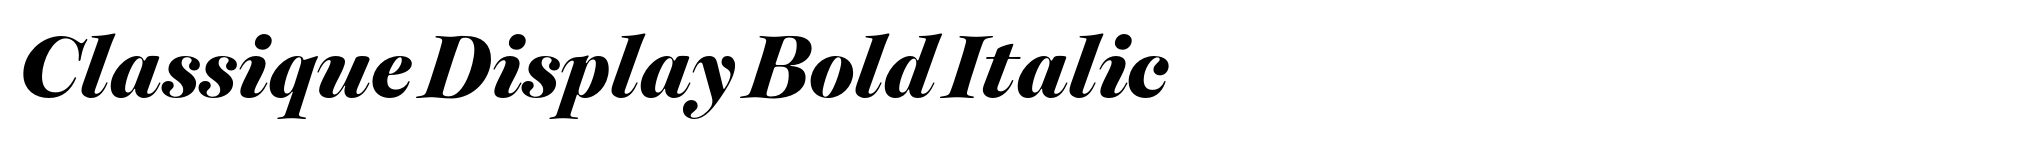 Classique Display Bold Italic image